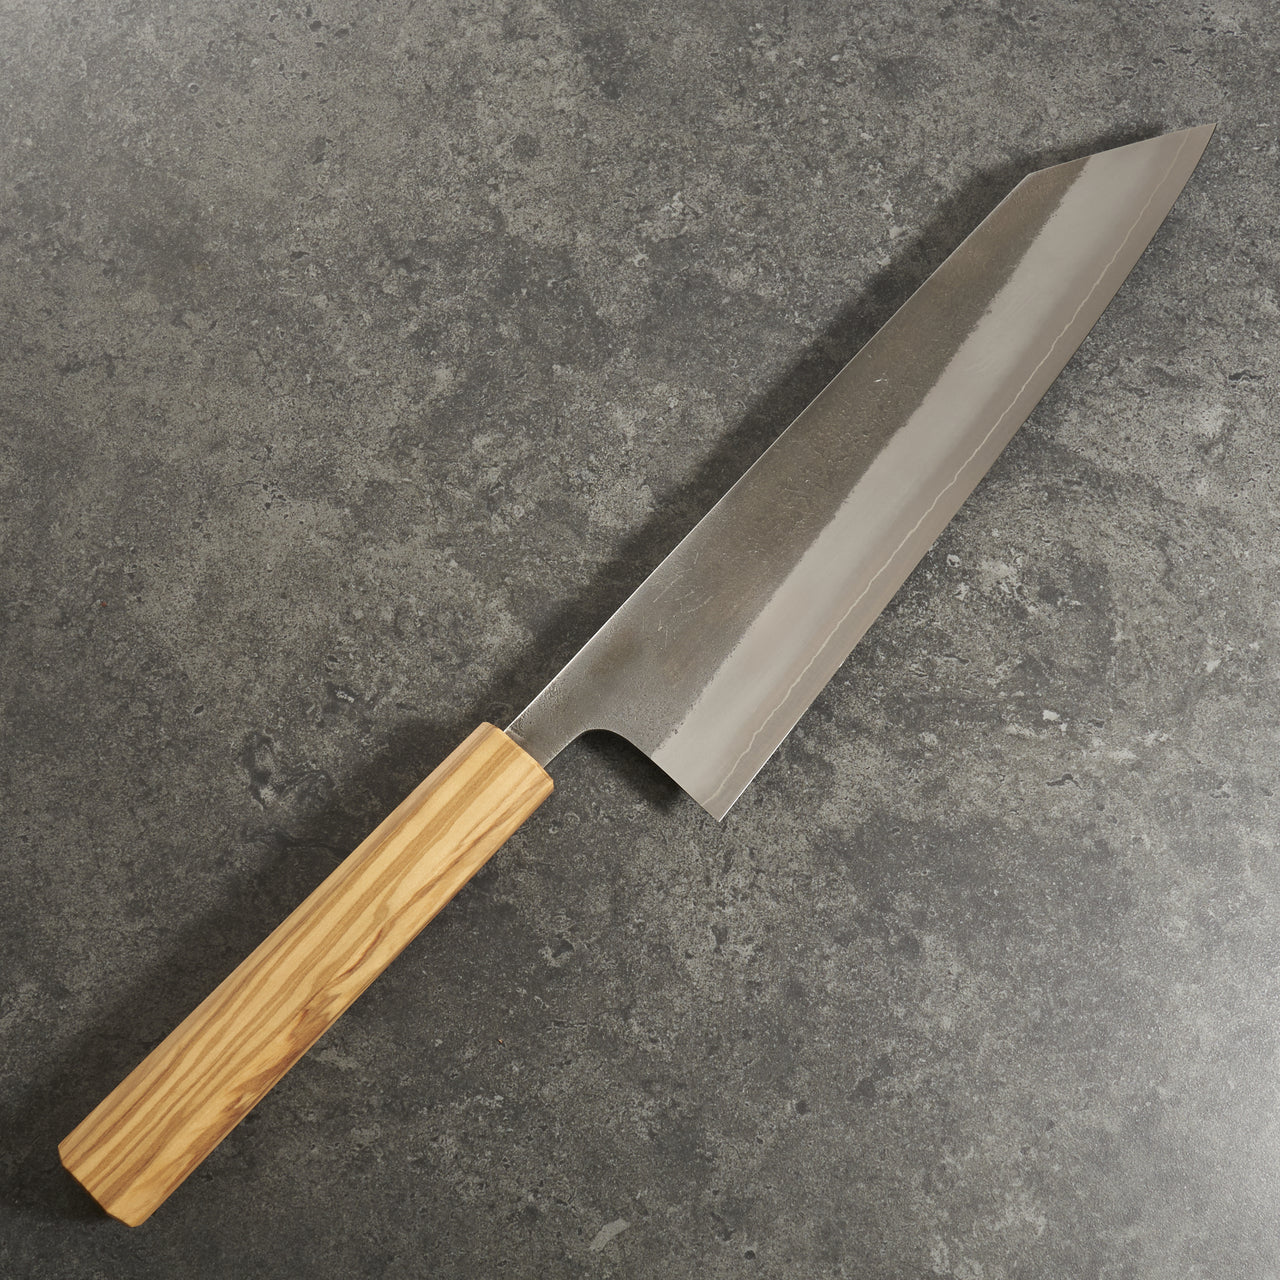 Yoshikane SKD Kiritsuke 240mm with Mono Olive Wood Handle - Blade